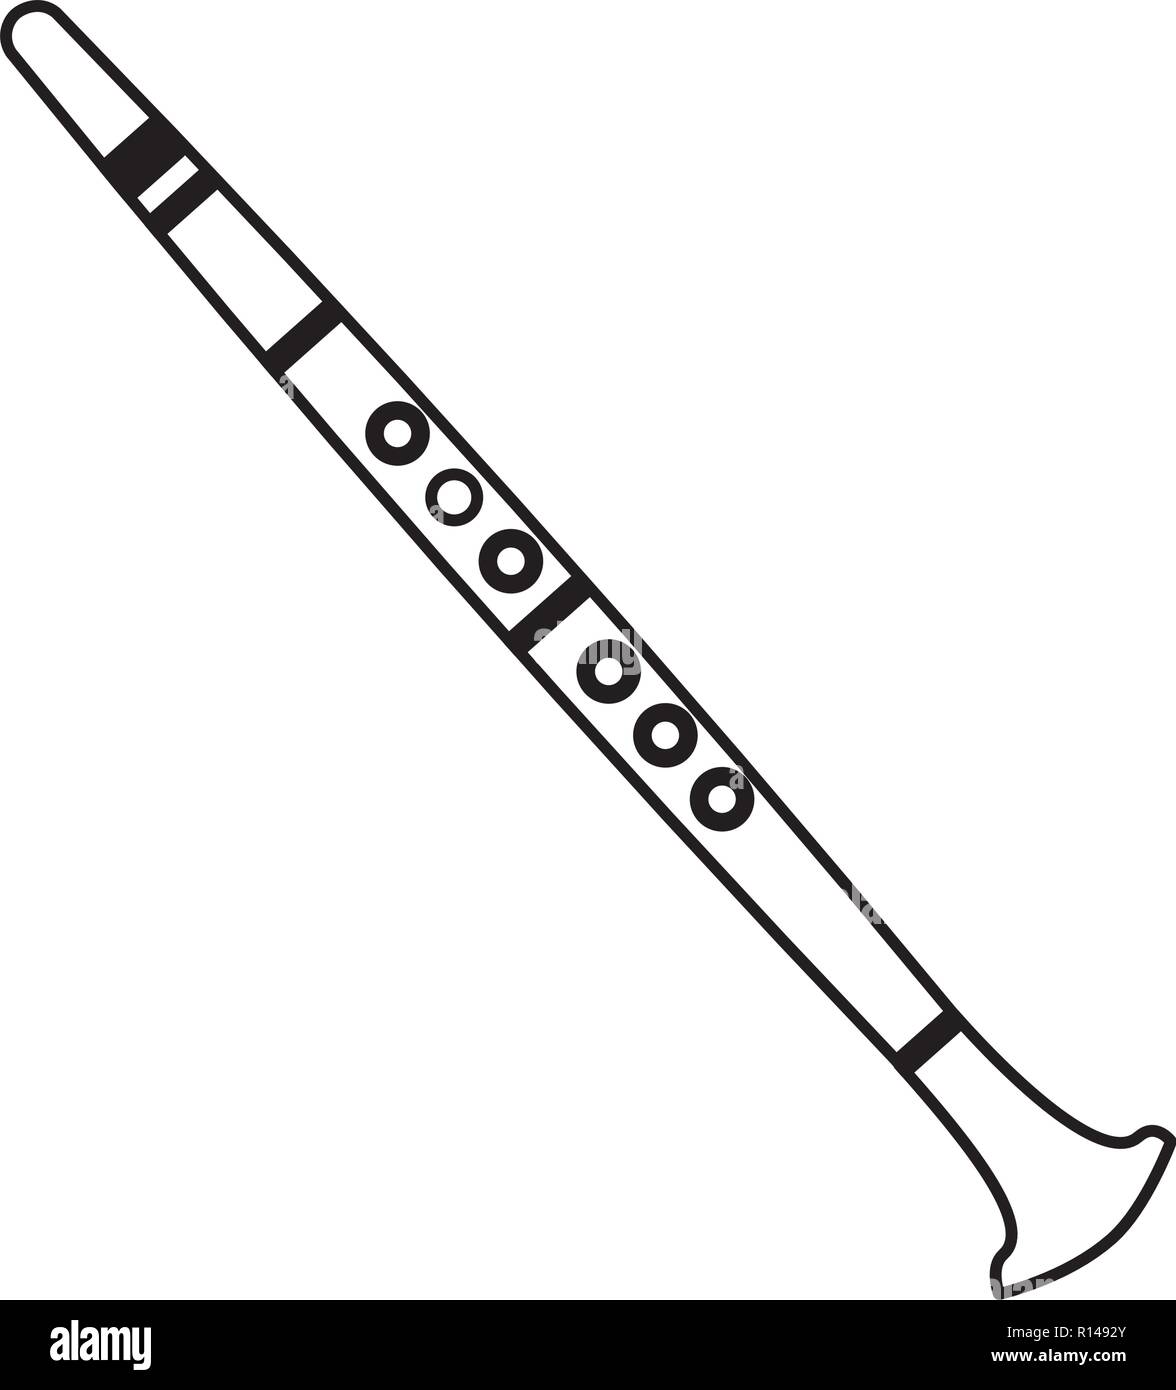 clarinet drawing